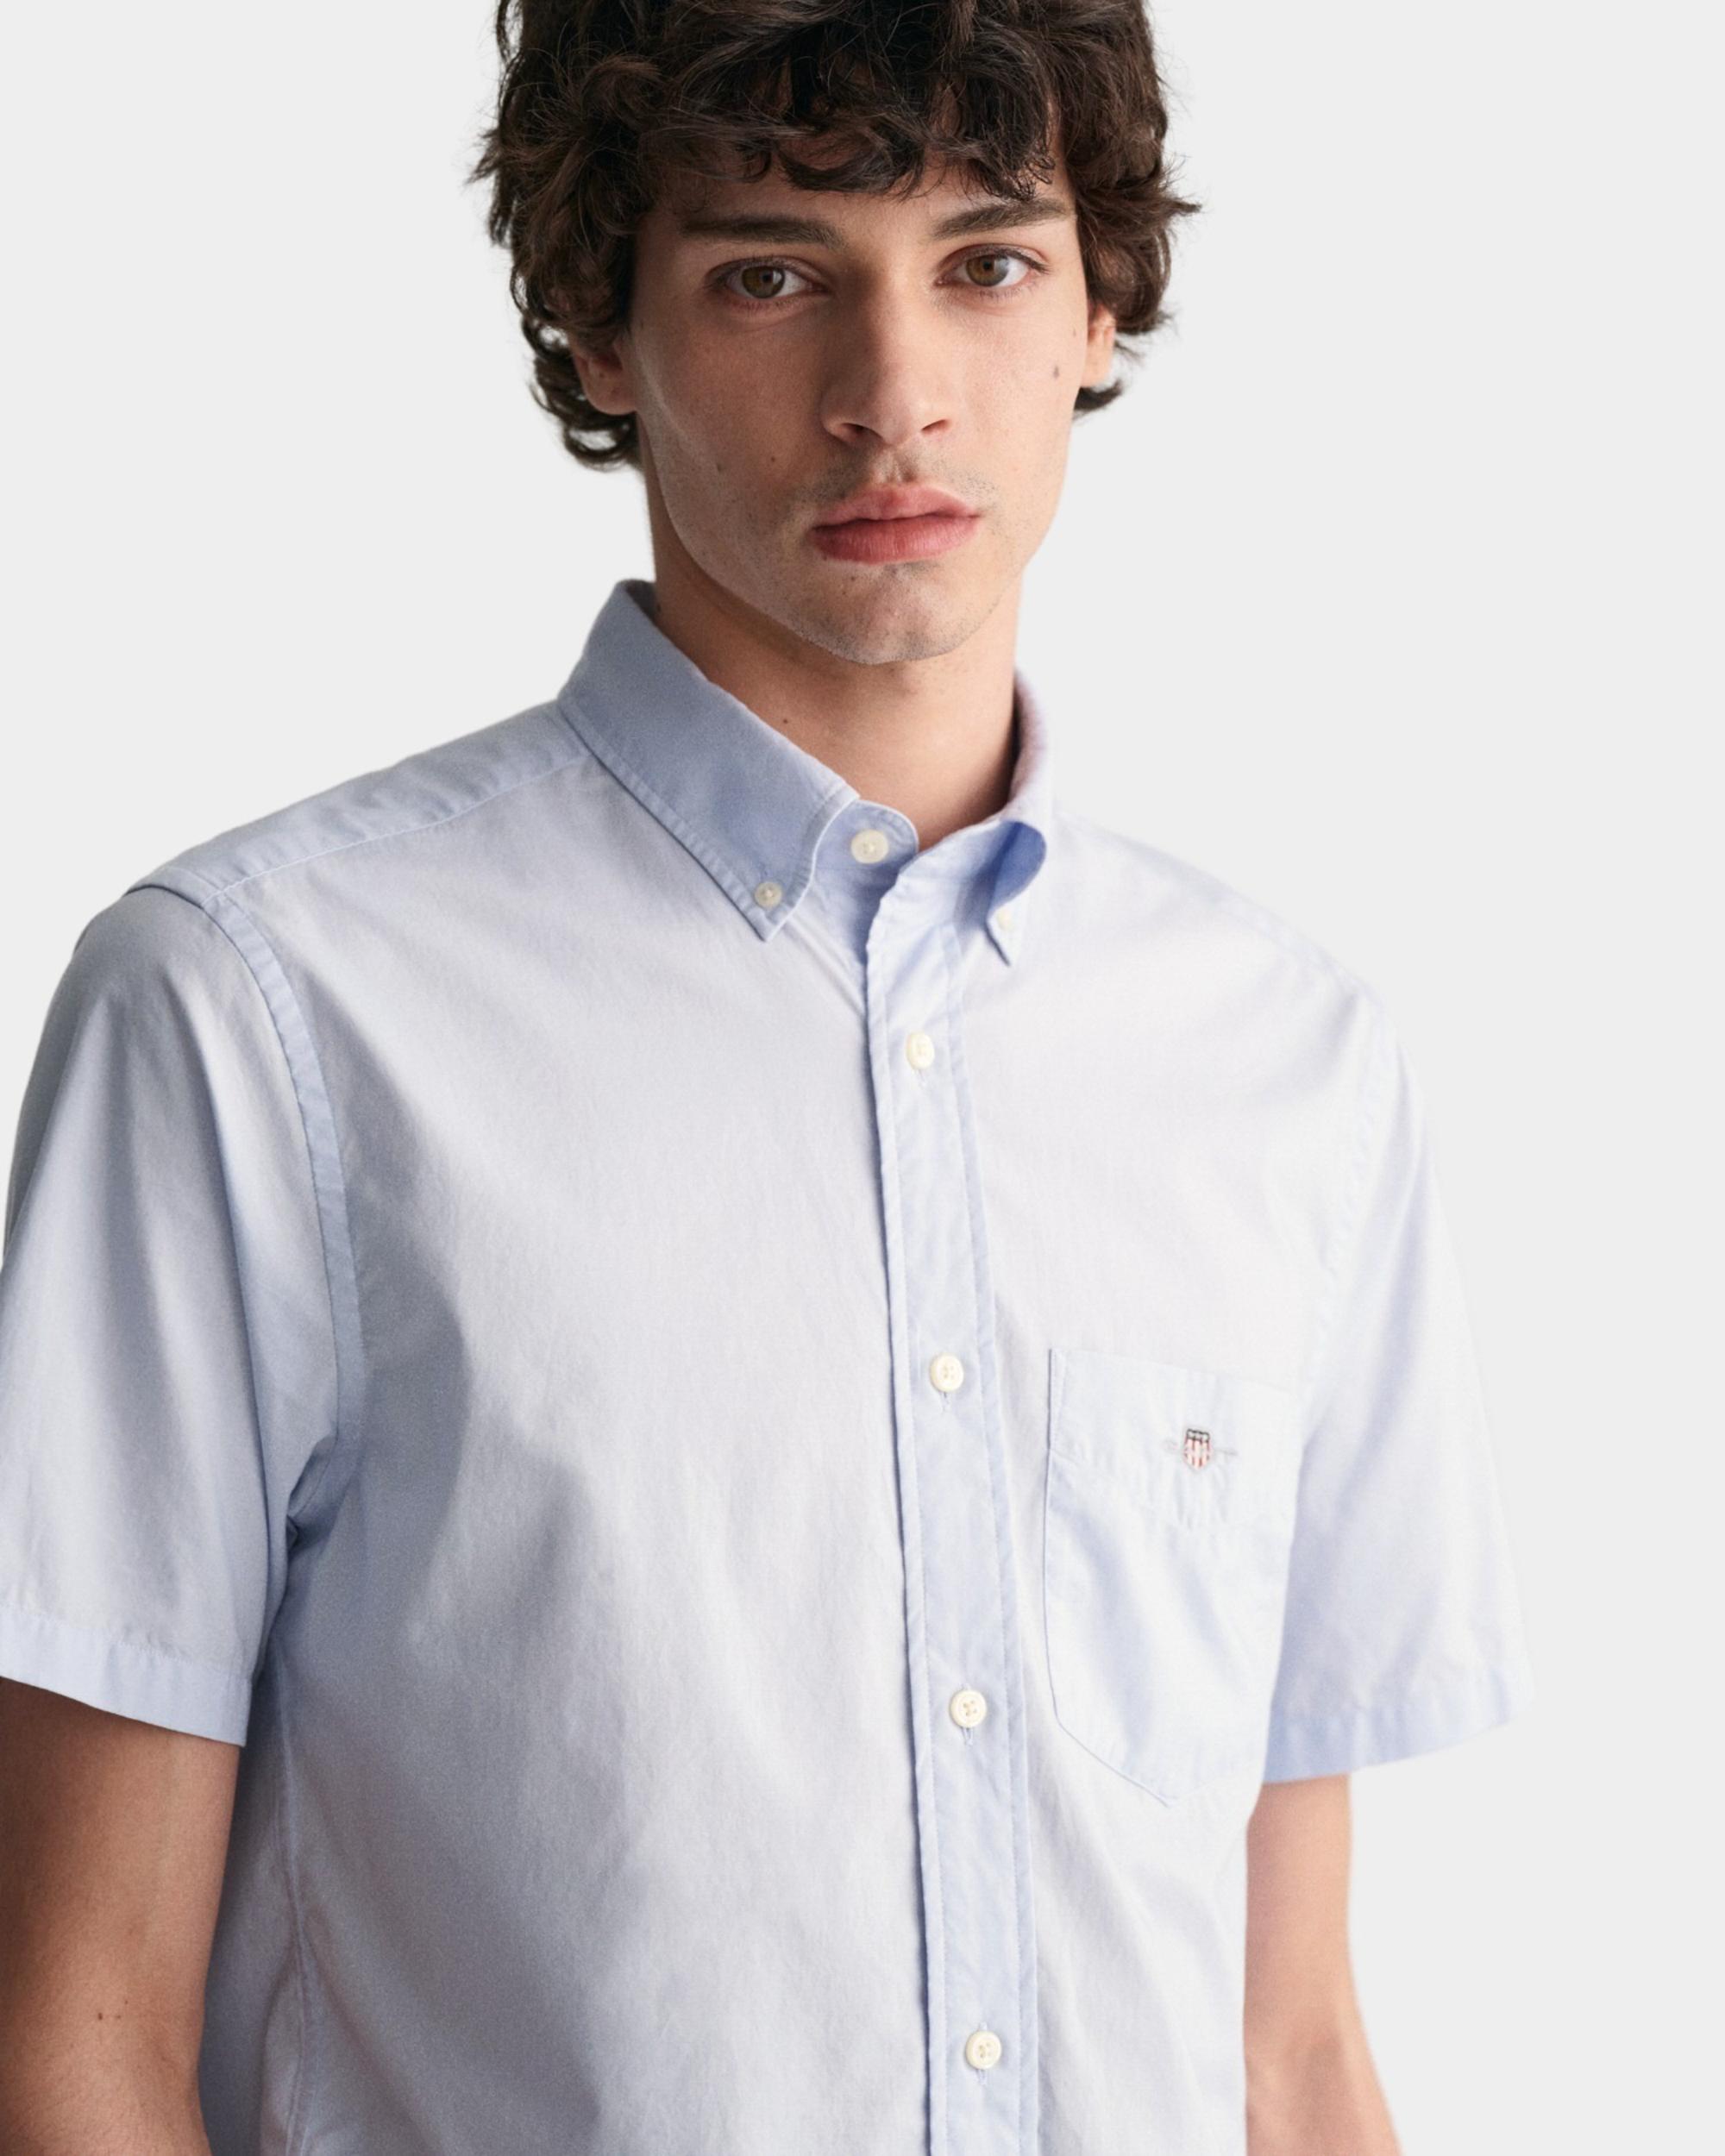 Gant Casual hemd korte mouw Blauw Poplin SS Shirt 3000101/455